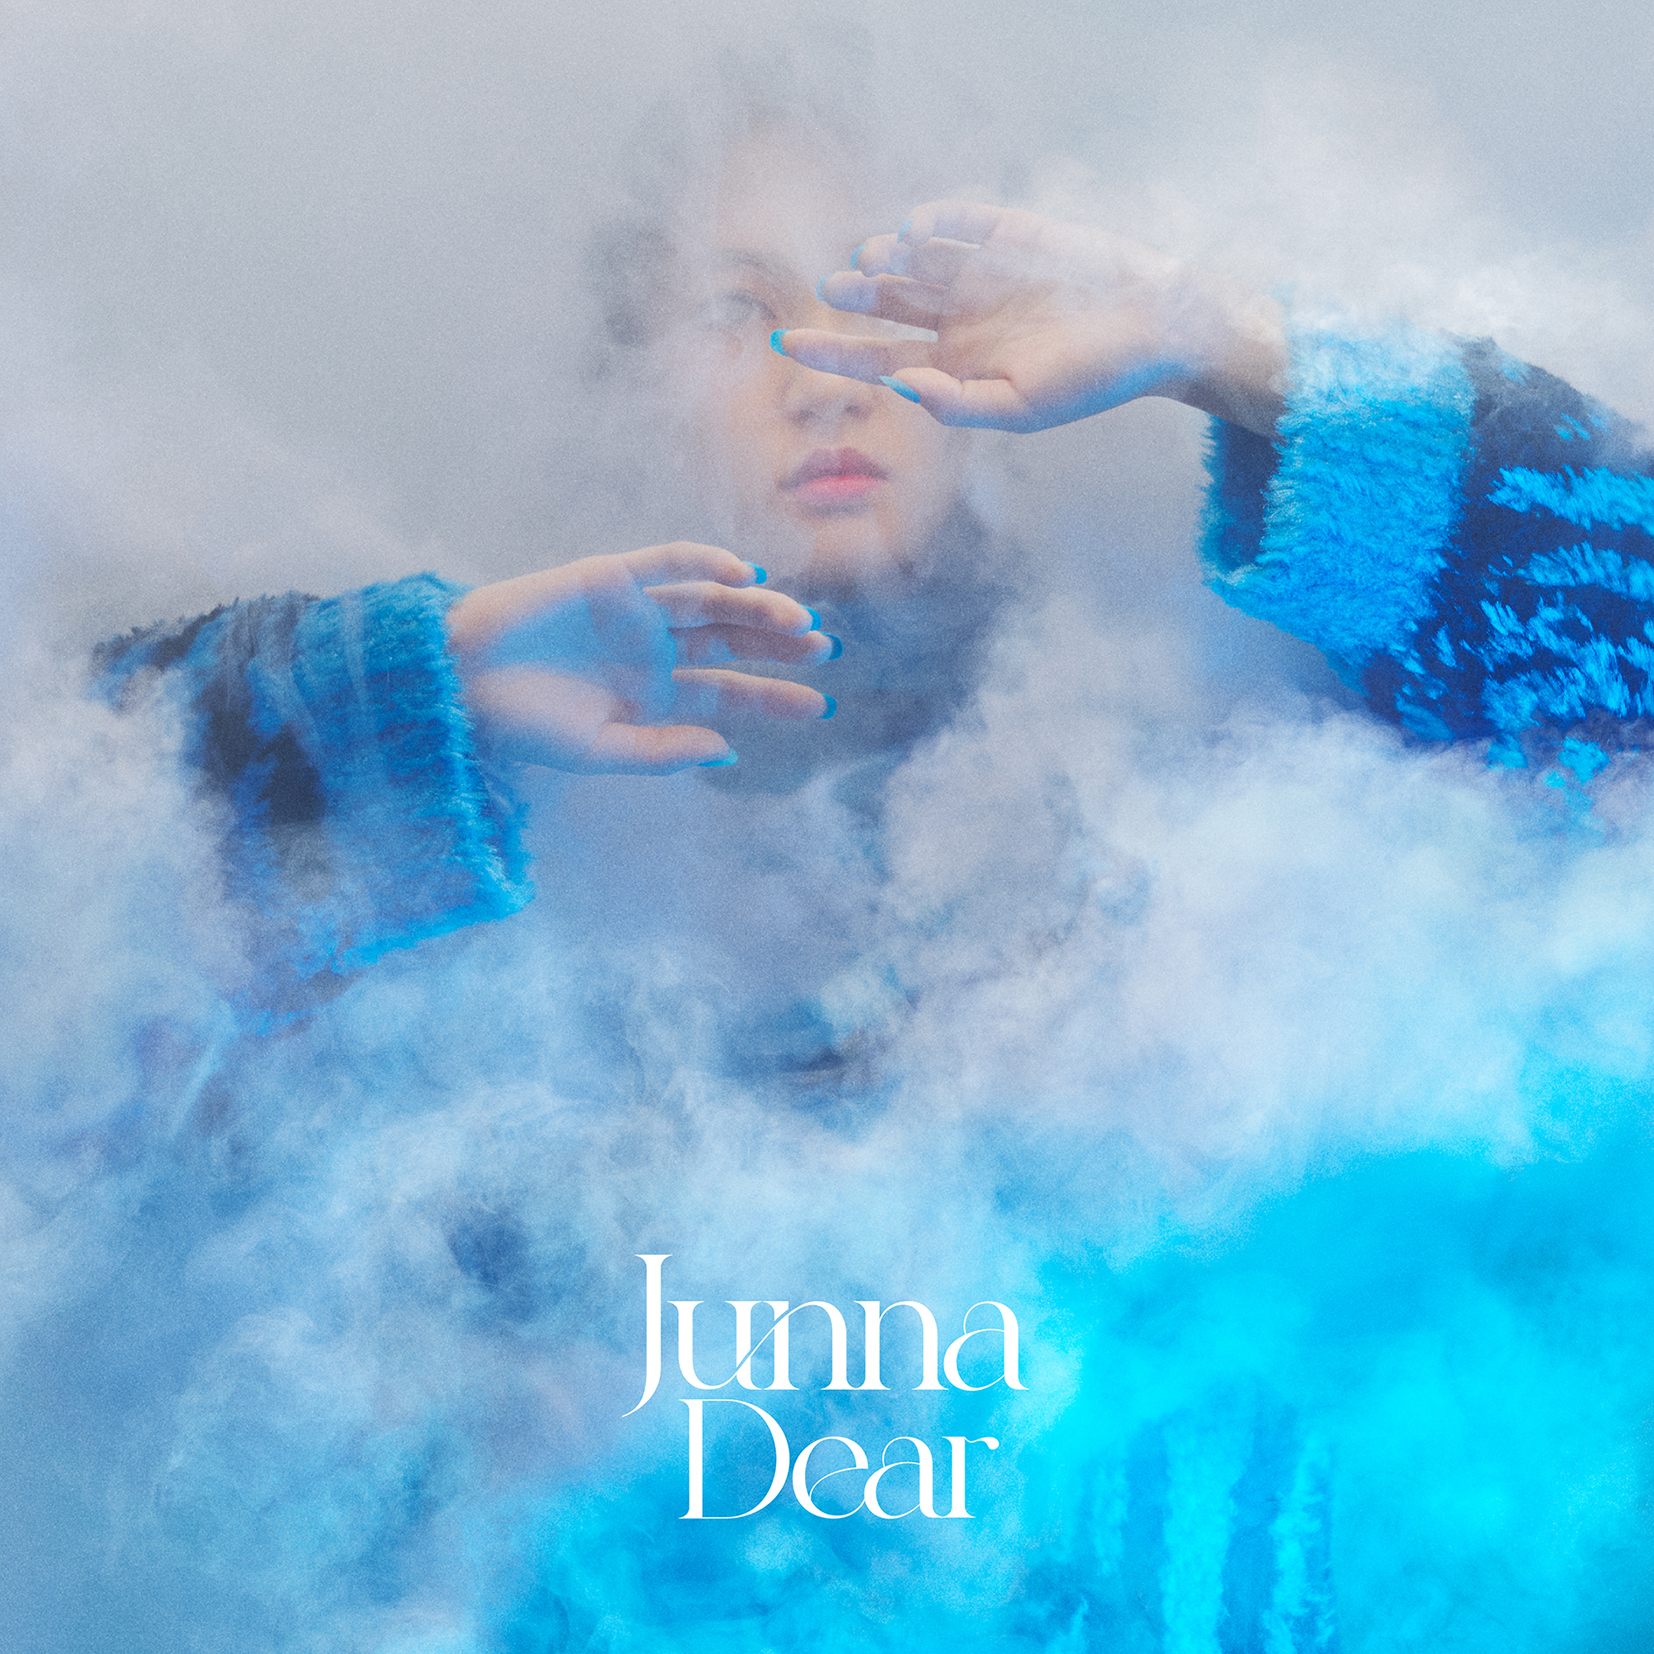 JUNNAデビュー5周年記念3rdフルアルバム『Dear』初回限定盤